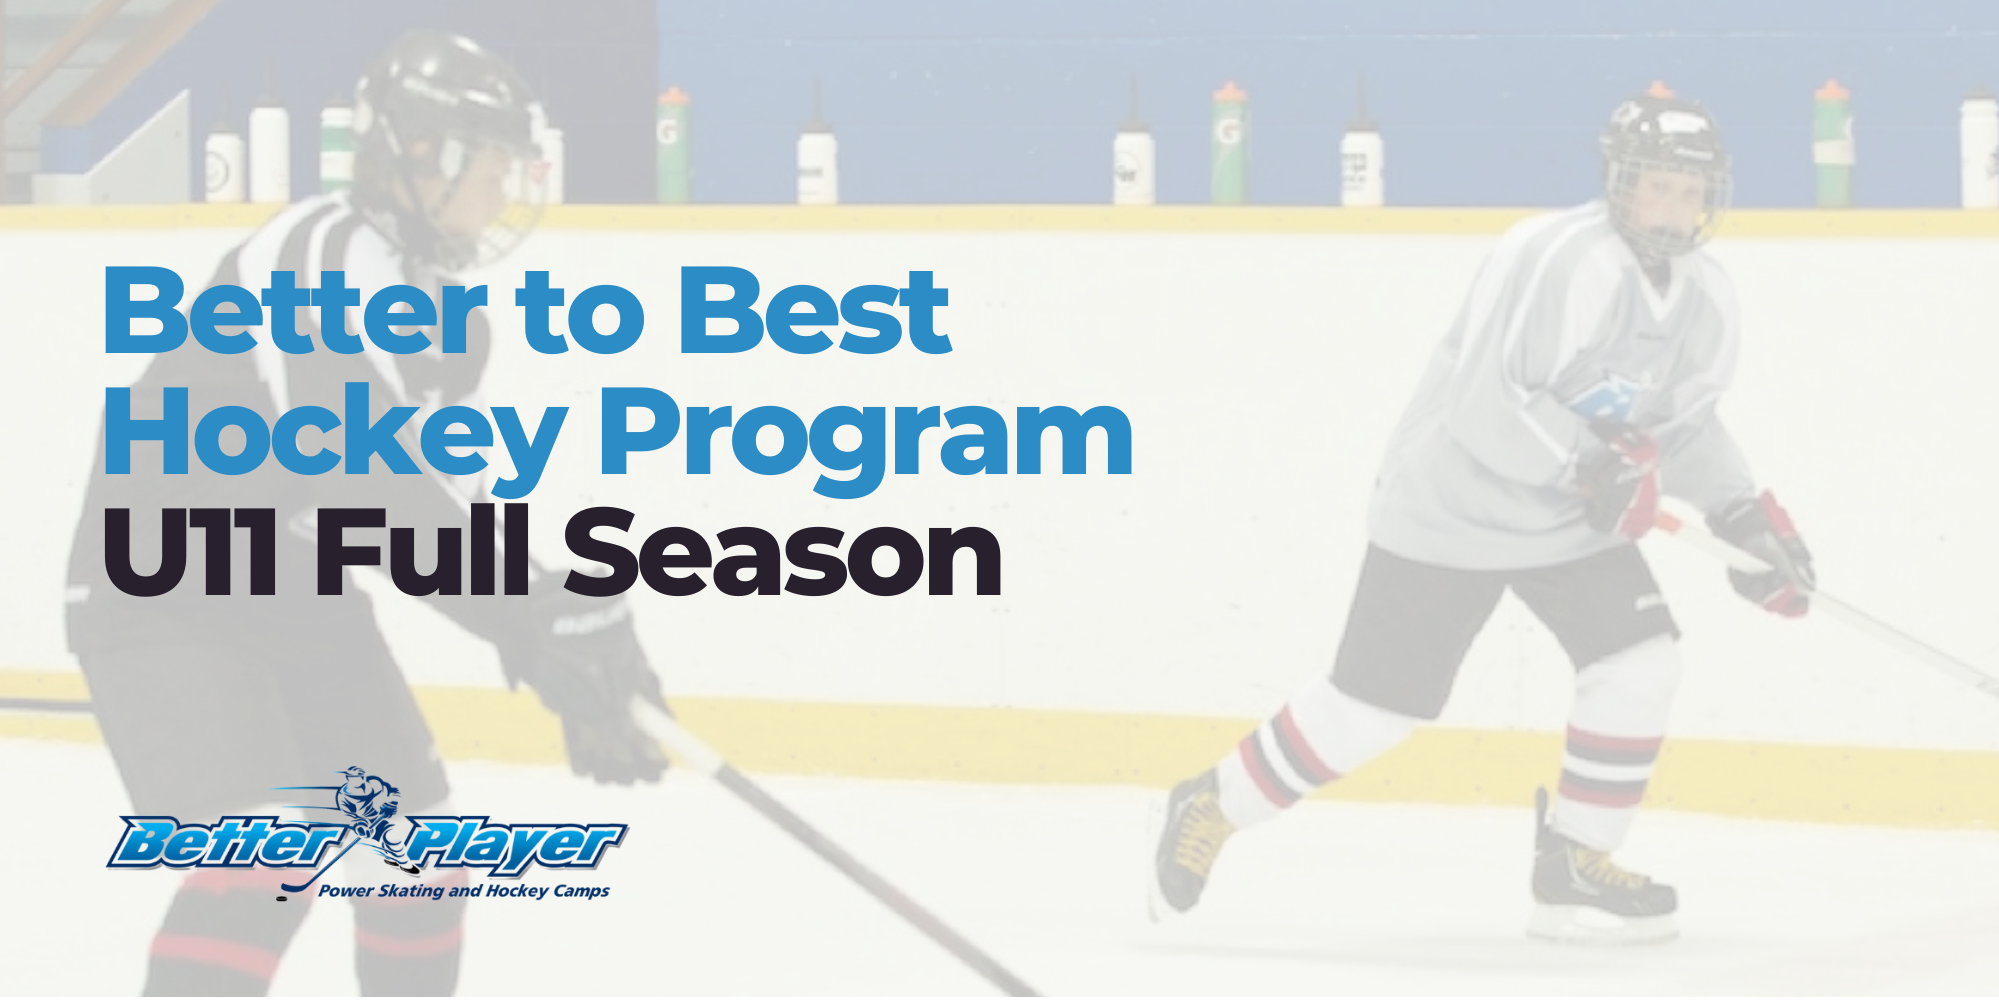 U11 Full Season | Better to Best Hockey Program